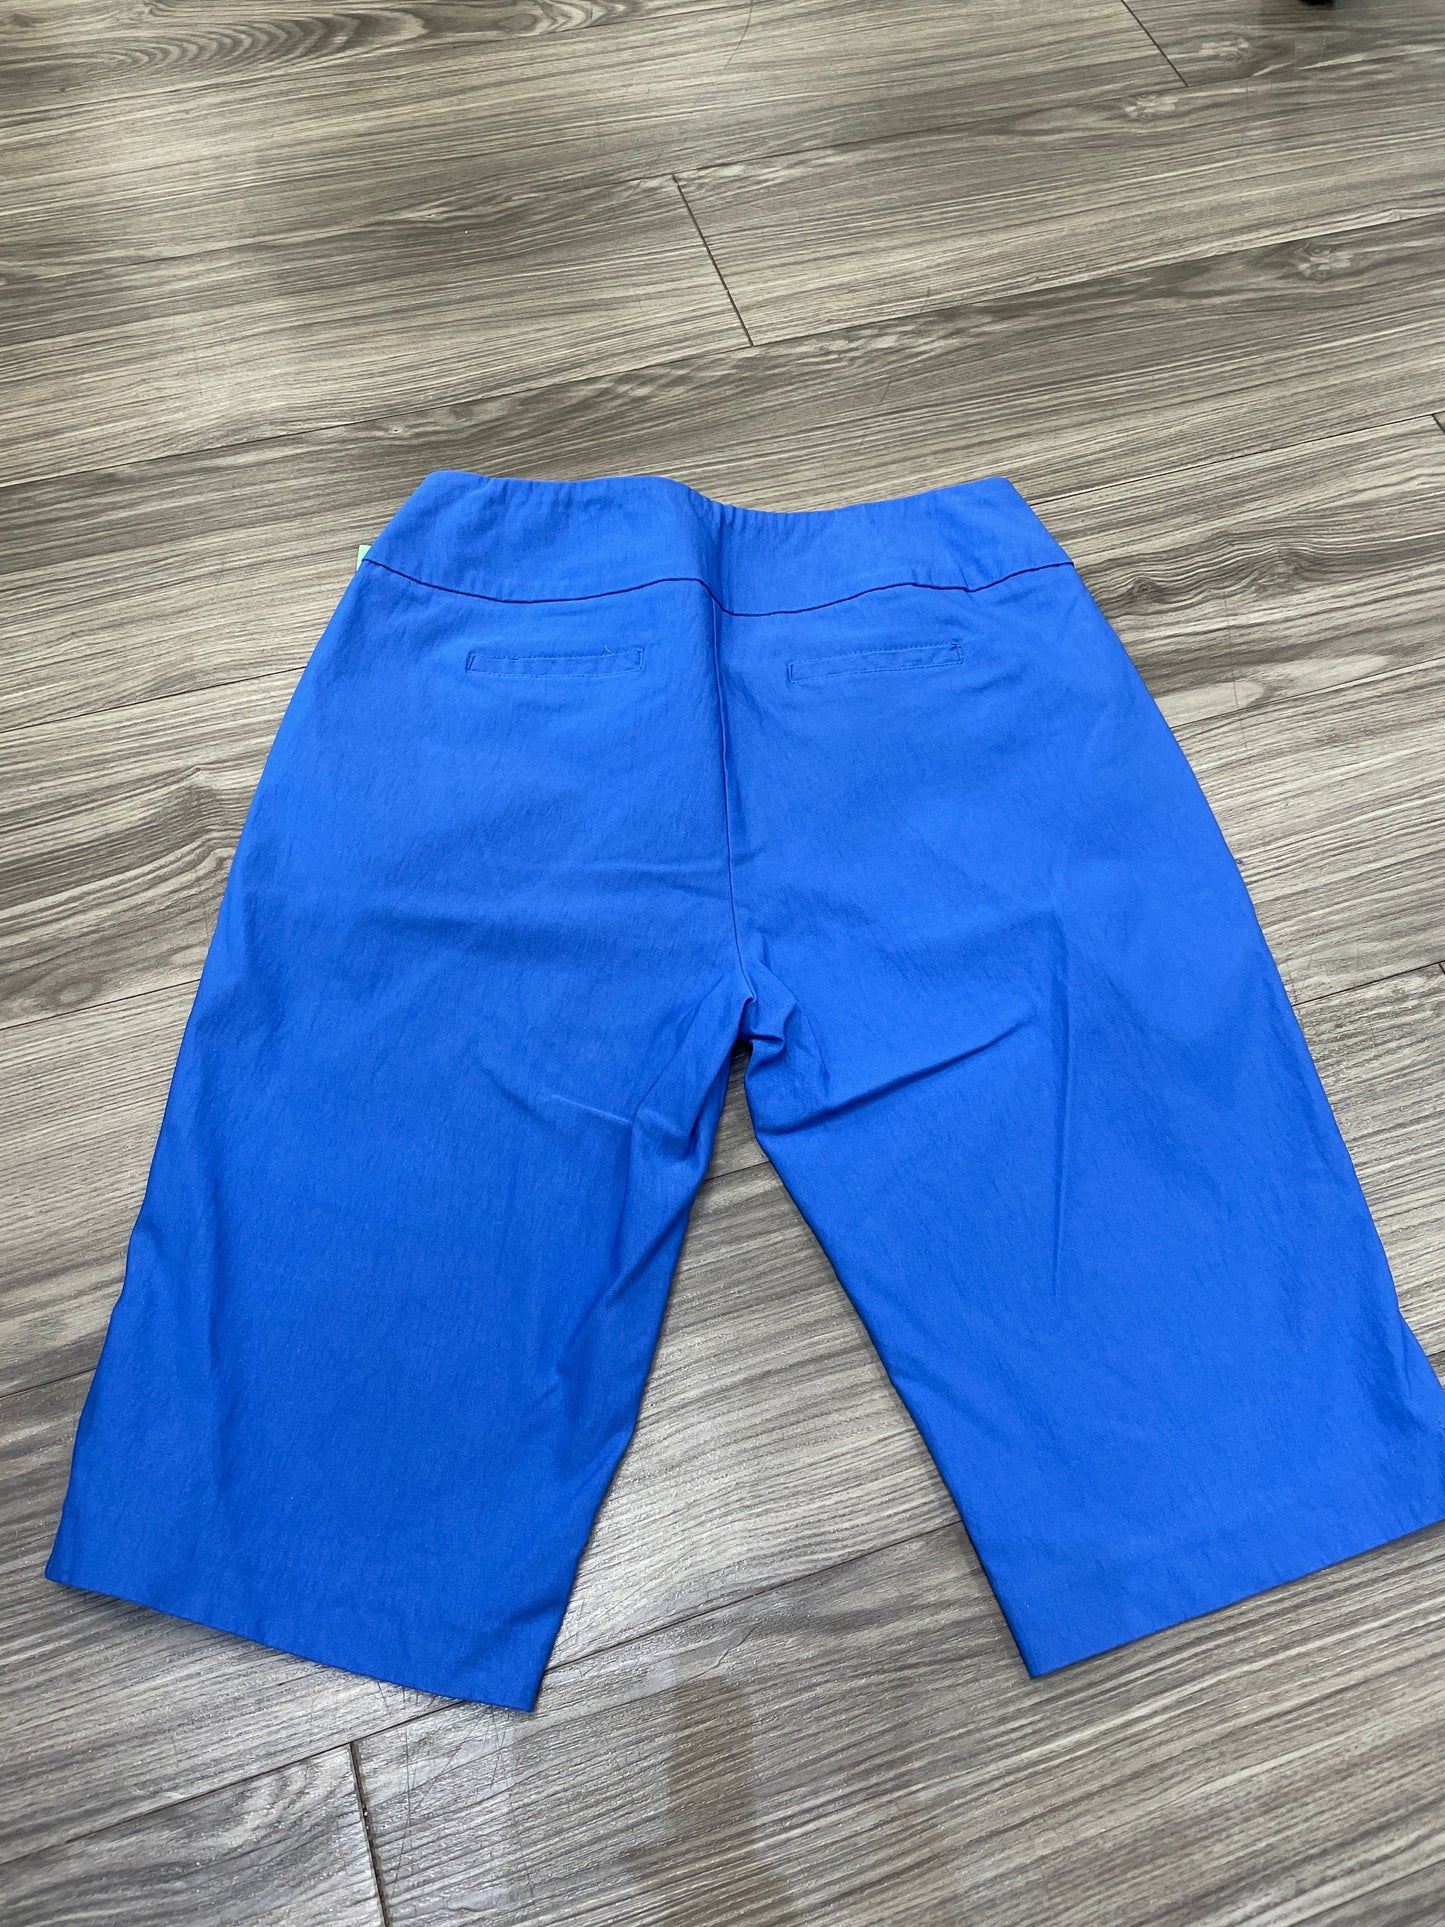 Blue Shorts Clothes Mentor, Size 14